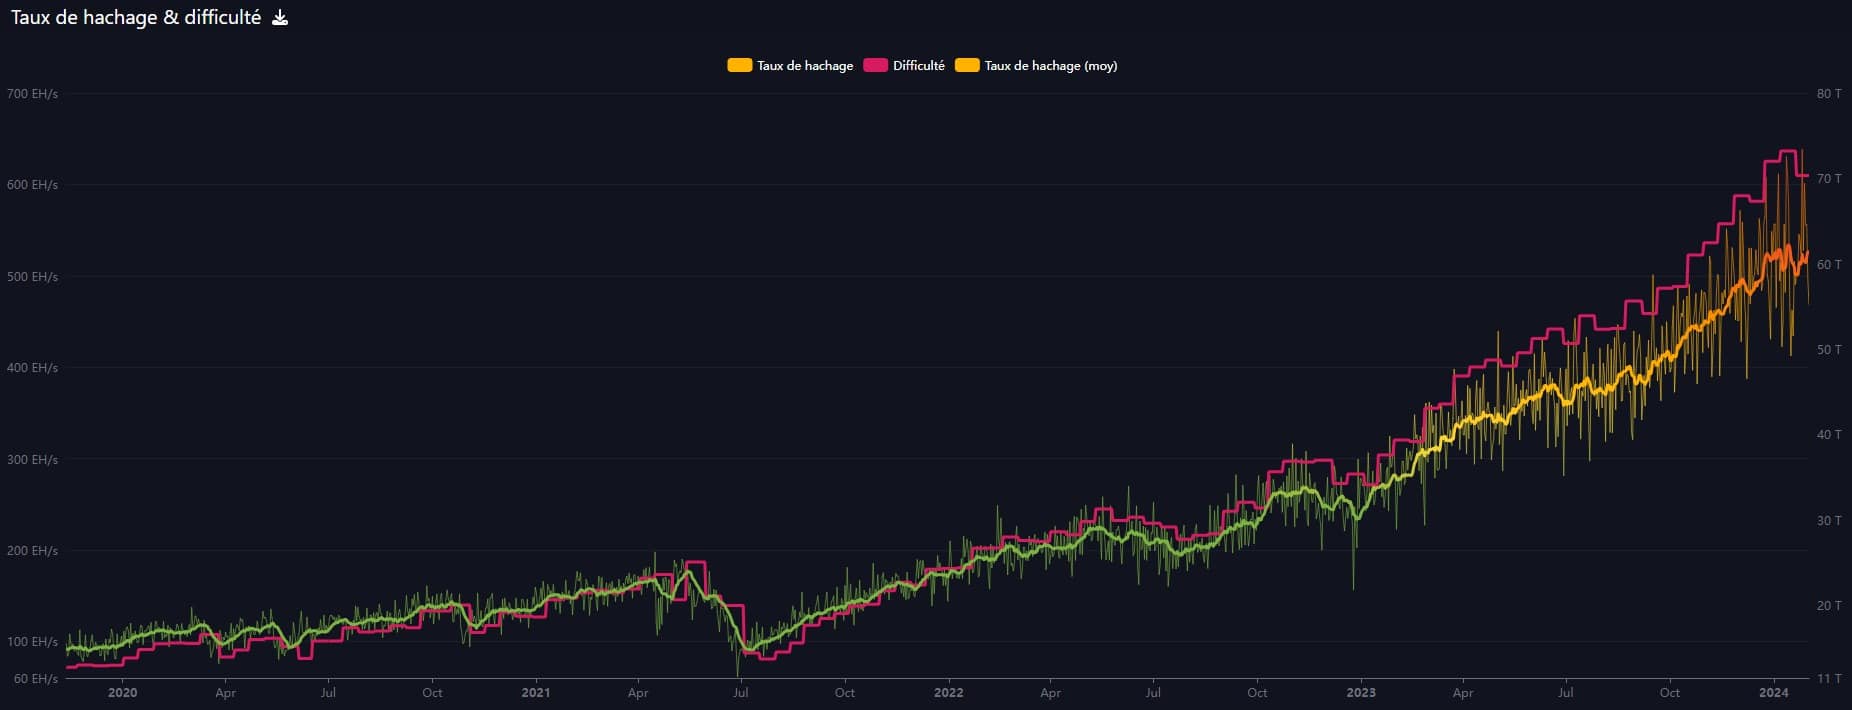 Bitcoin hash rate since 2020